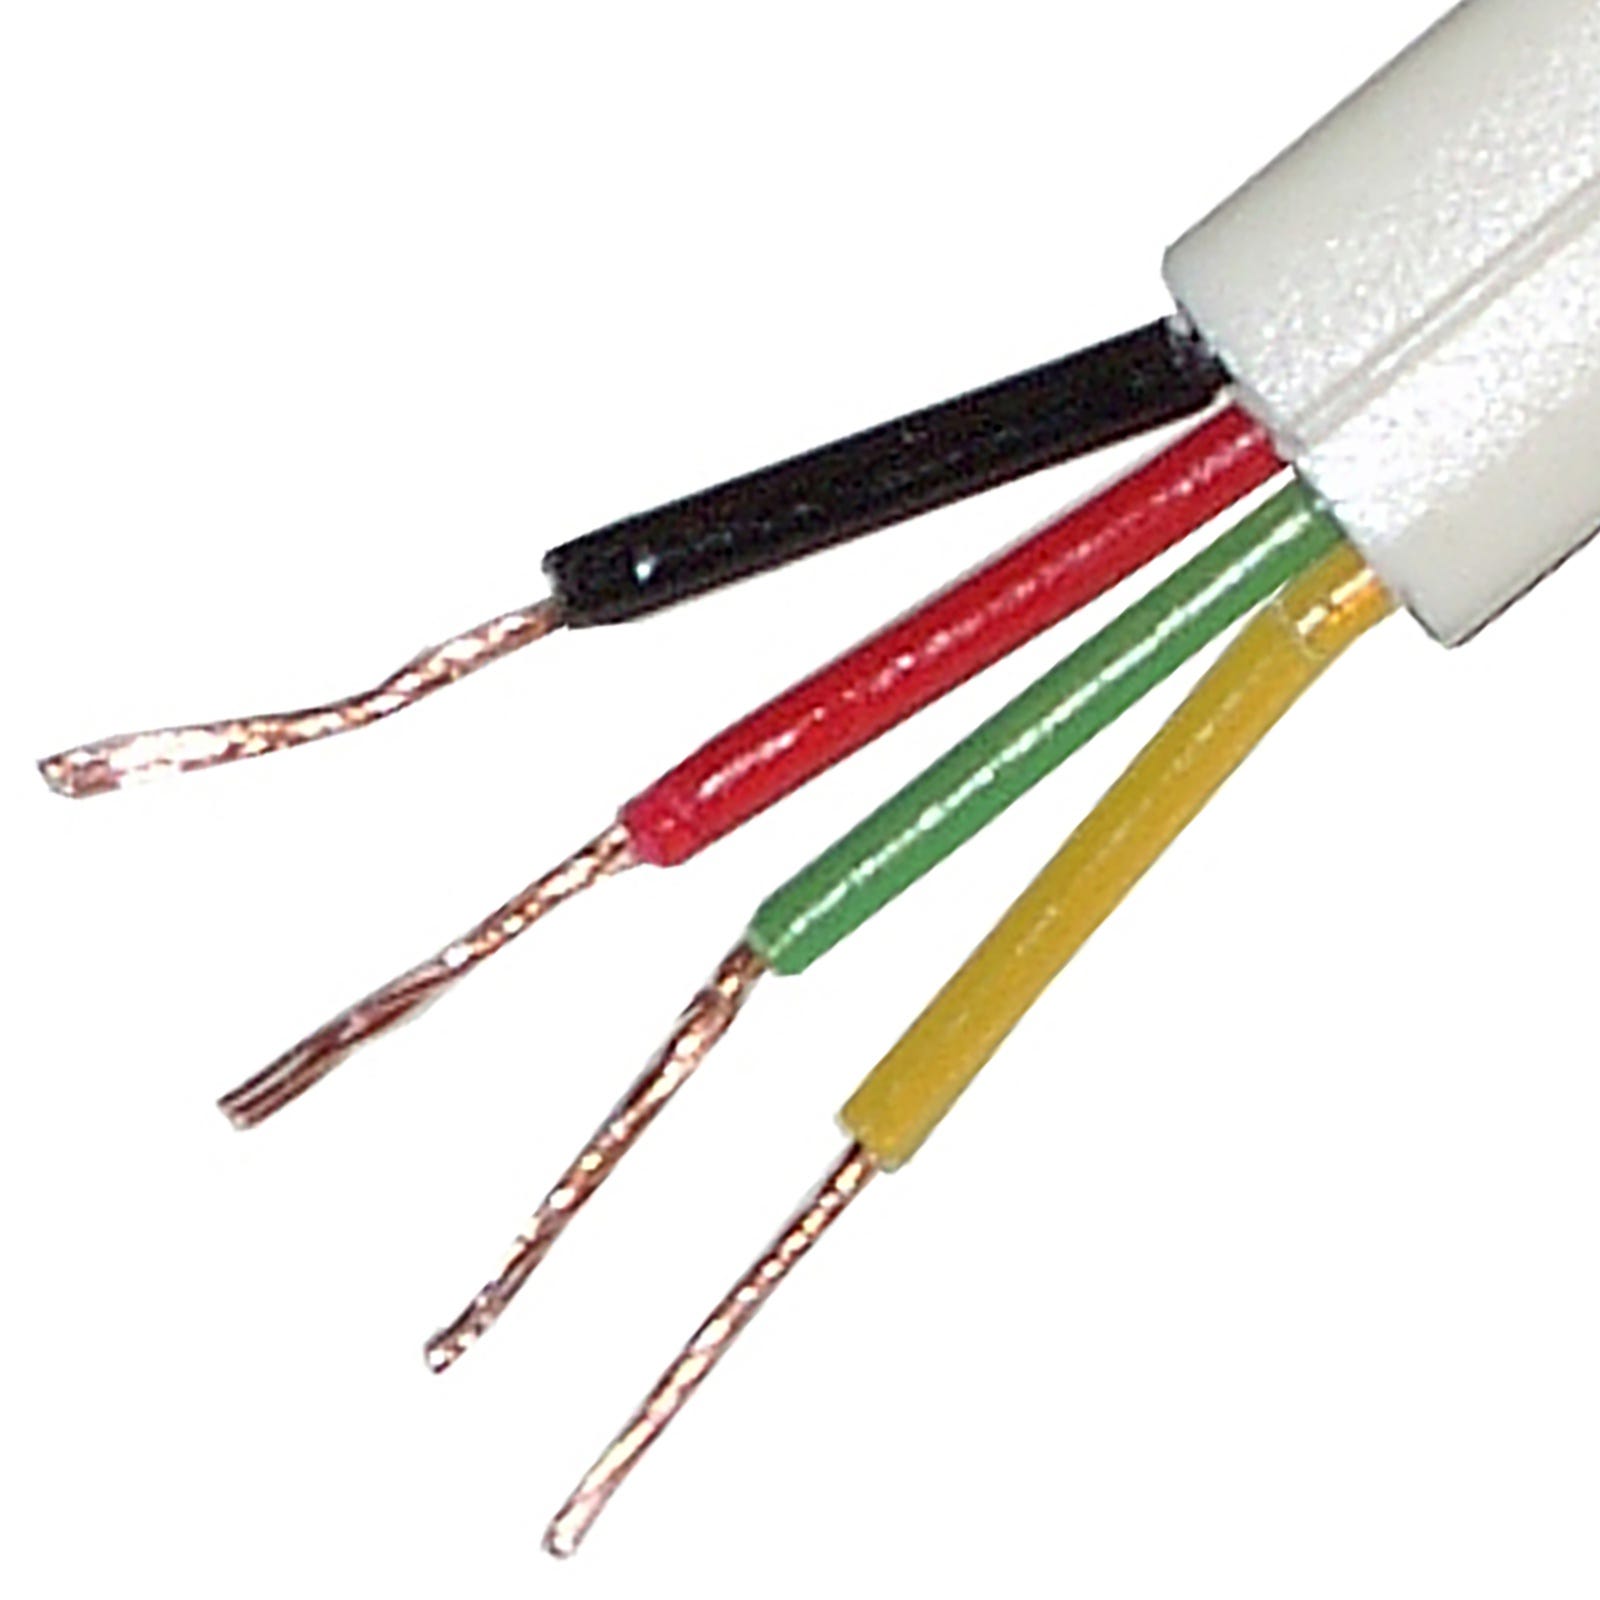 Cable telefonico redondo 4 hilos - blanco > cable / conector telefonicos >  cables y conectores > cable > redondo